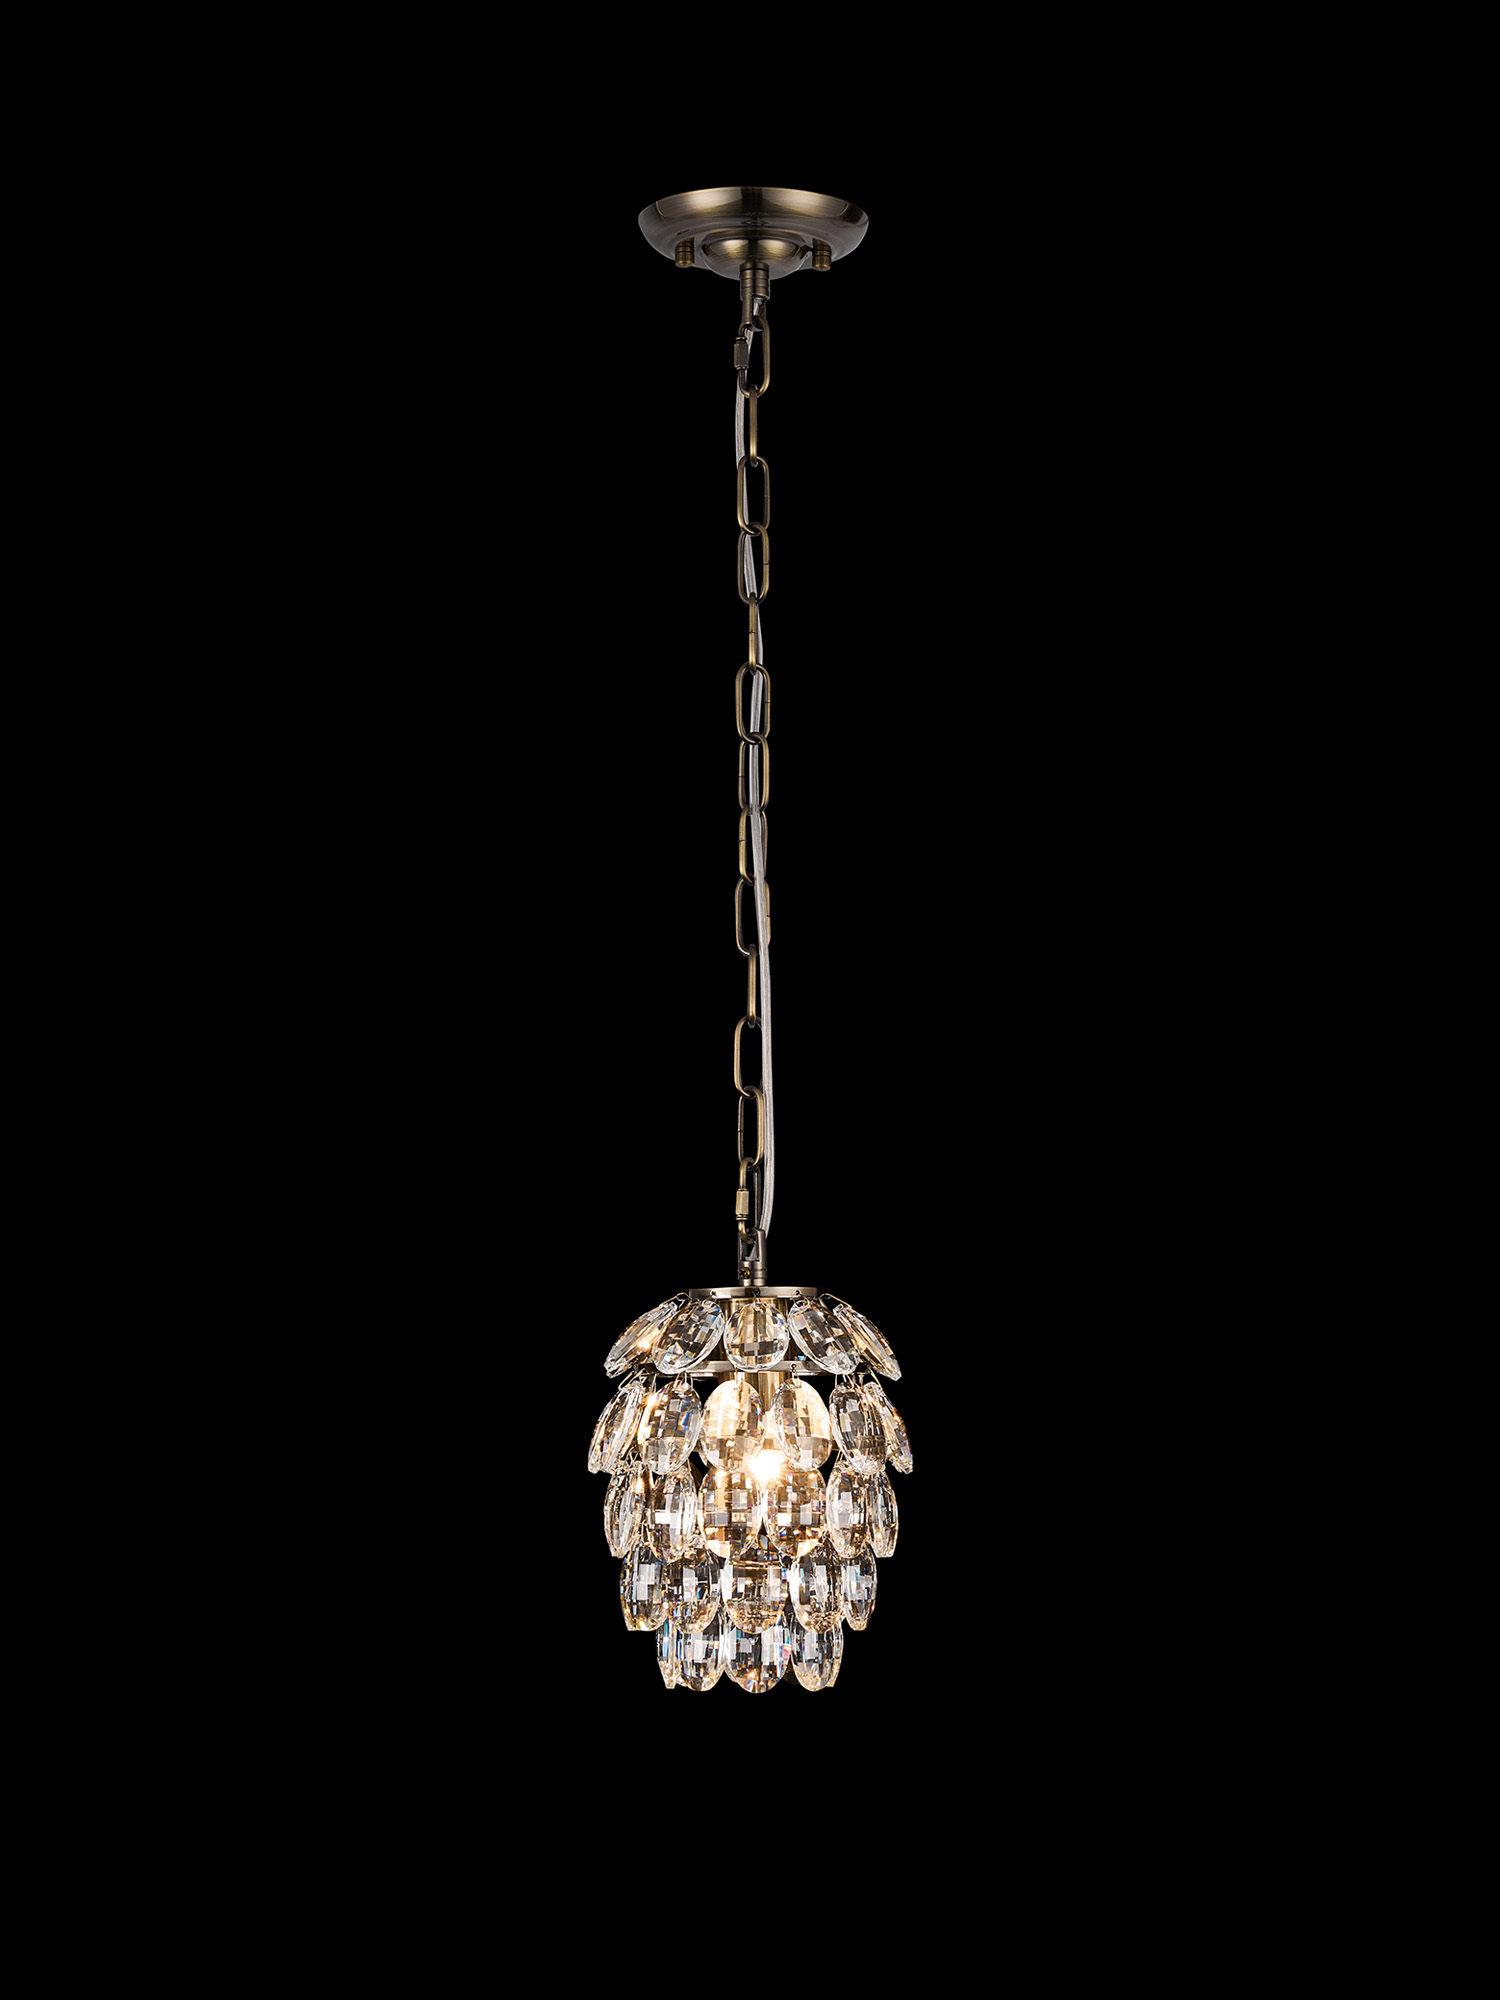 Coniston Antique Brass Crystal Ceiling Lights Diyas Single Crystal Pendants